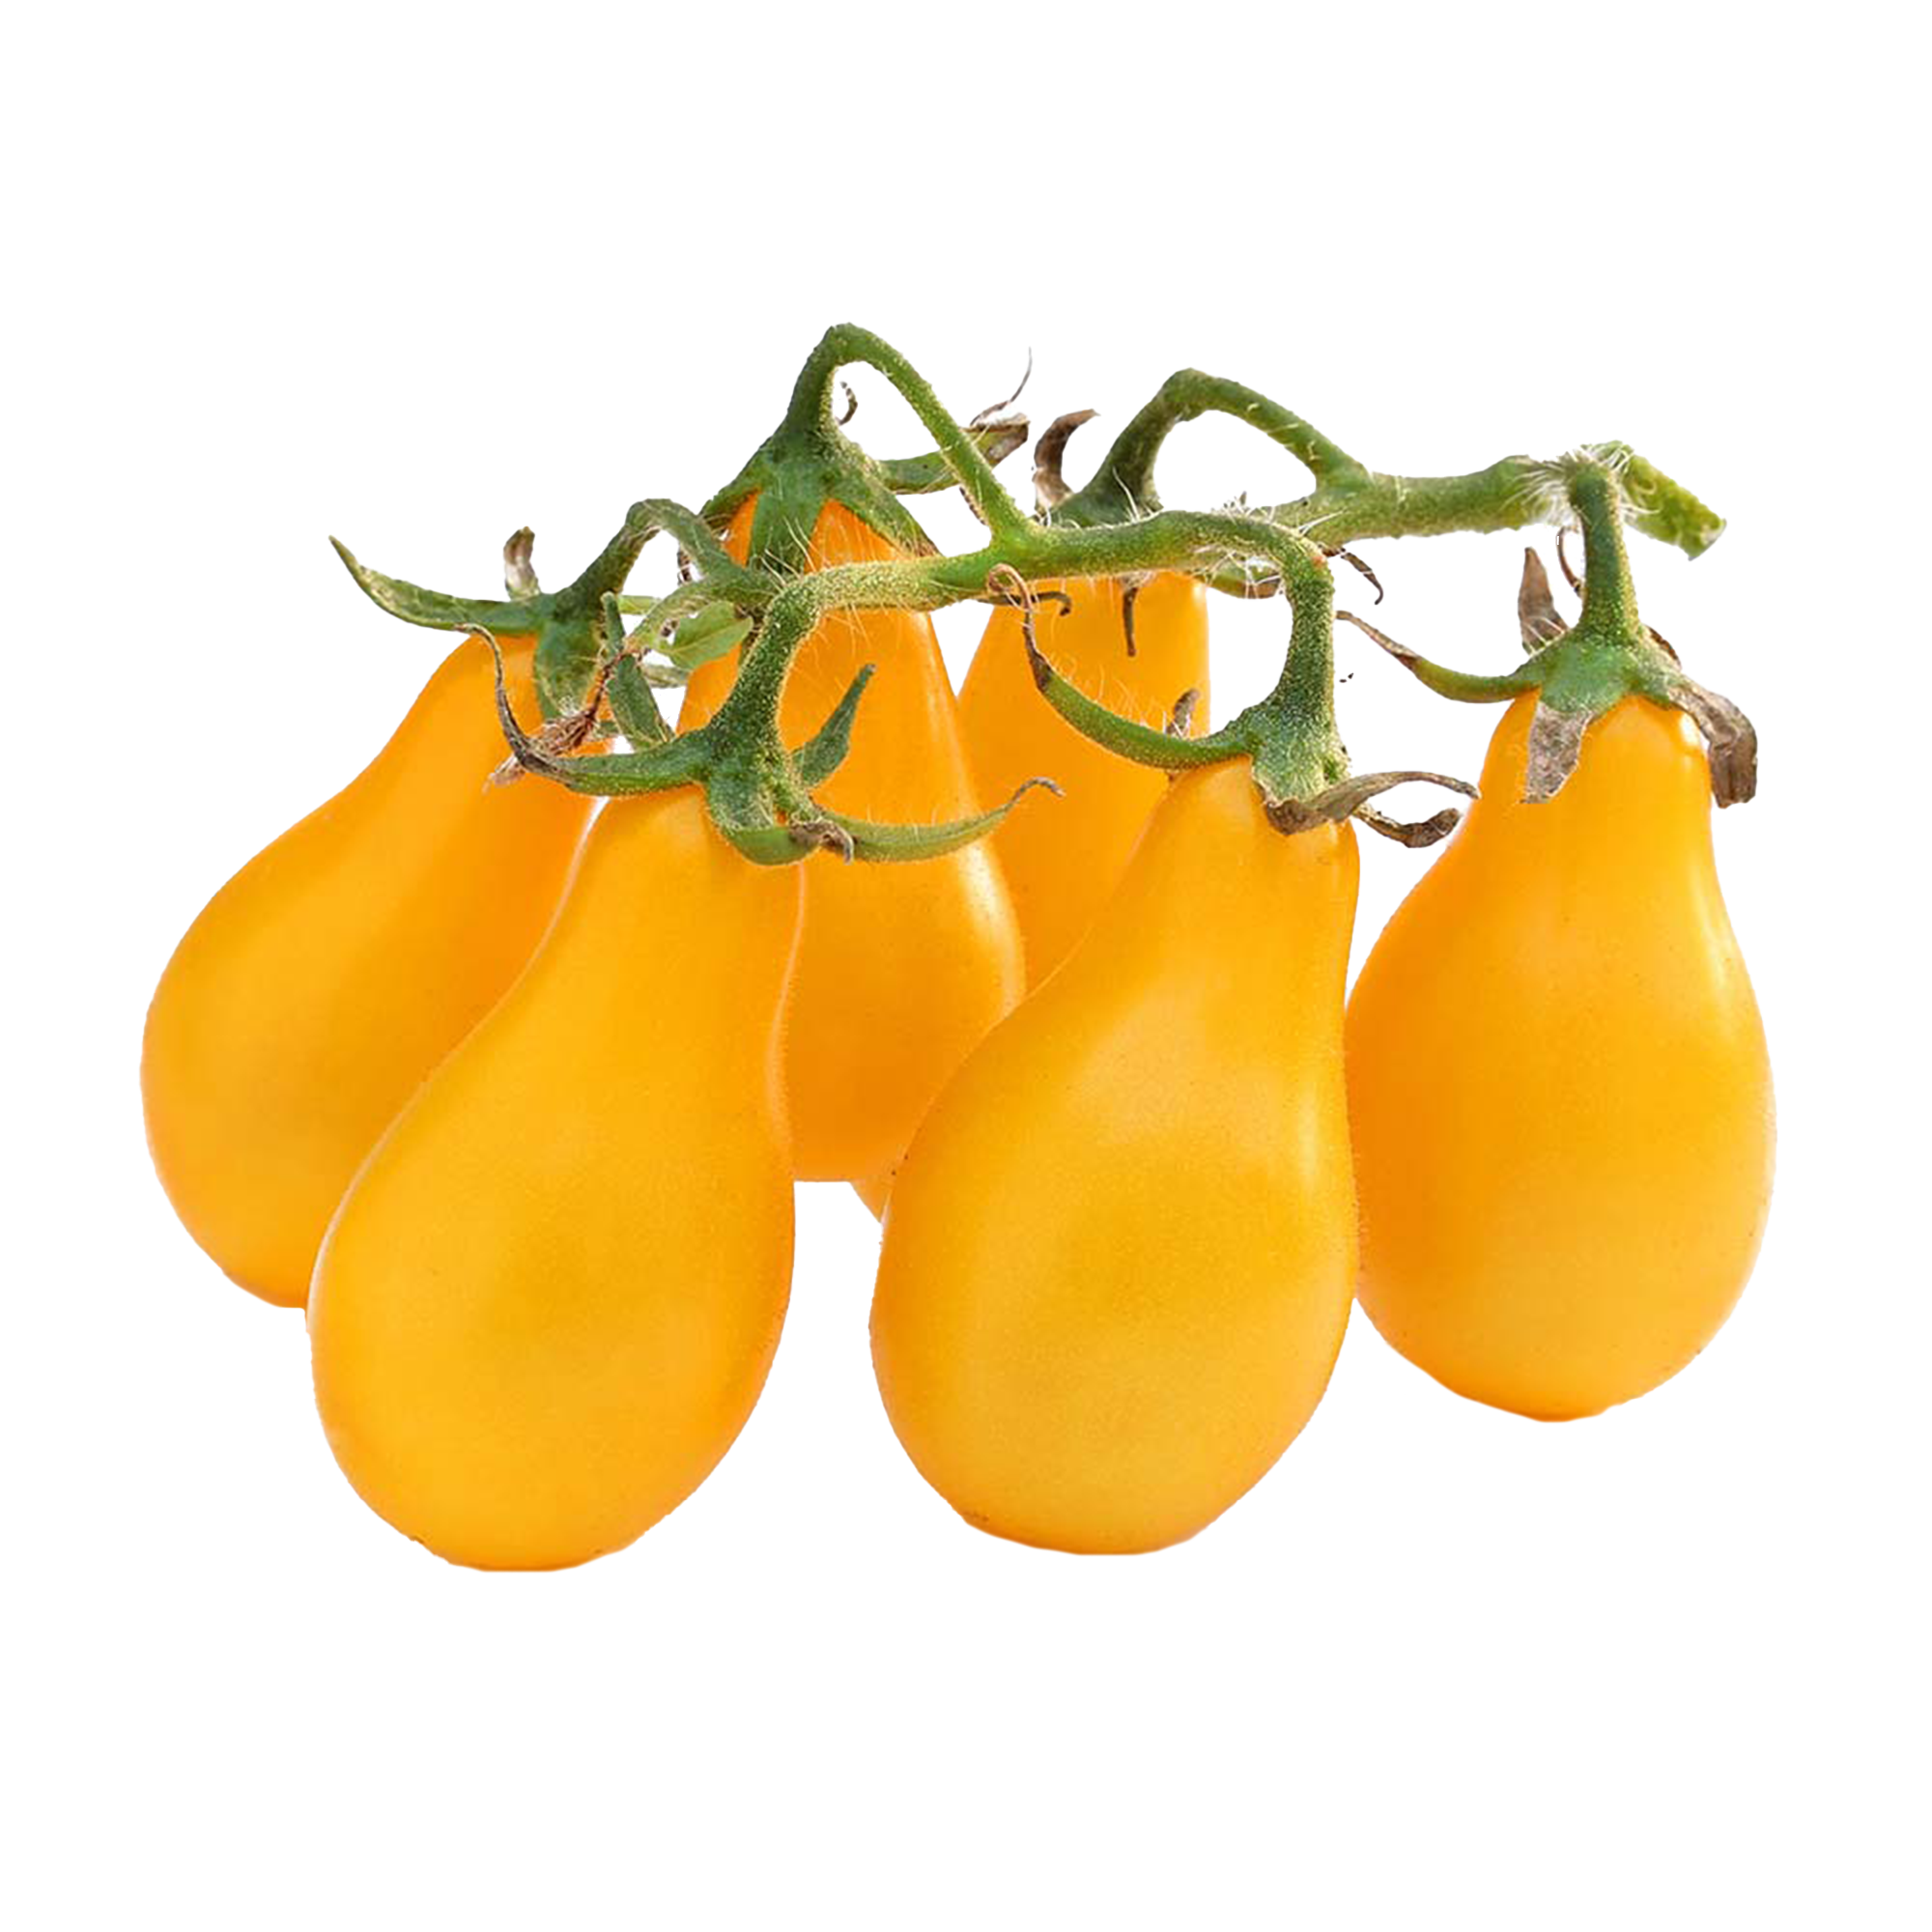 Tomato plants "Yellow Pearshaped"